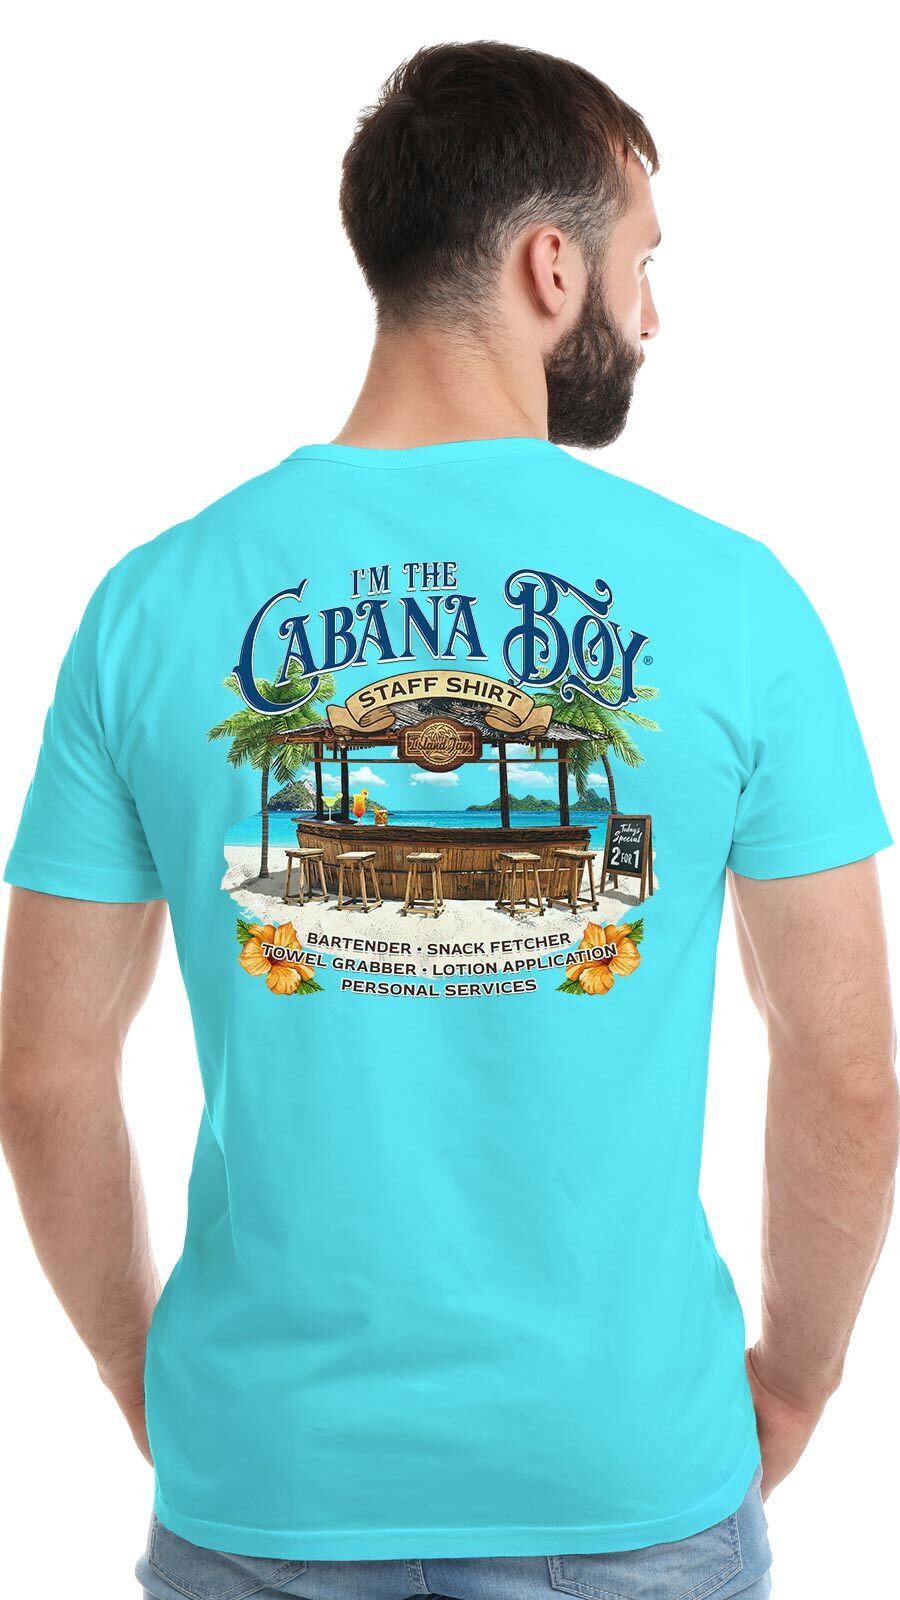 I'm The Cabana Boy STAFF T-Shirt